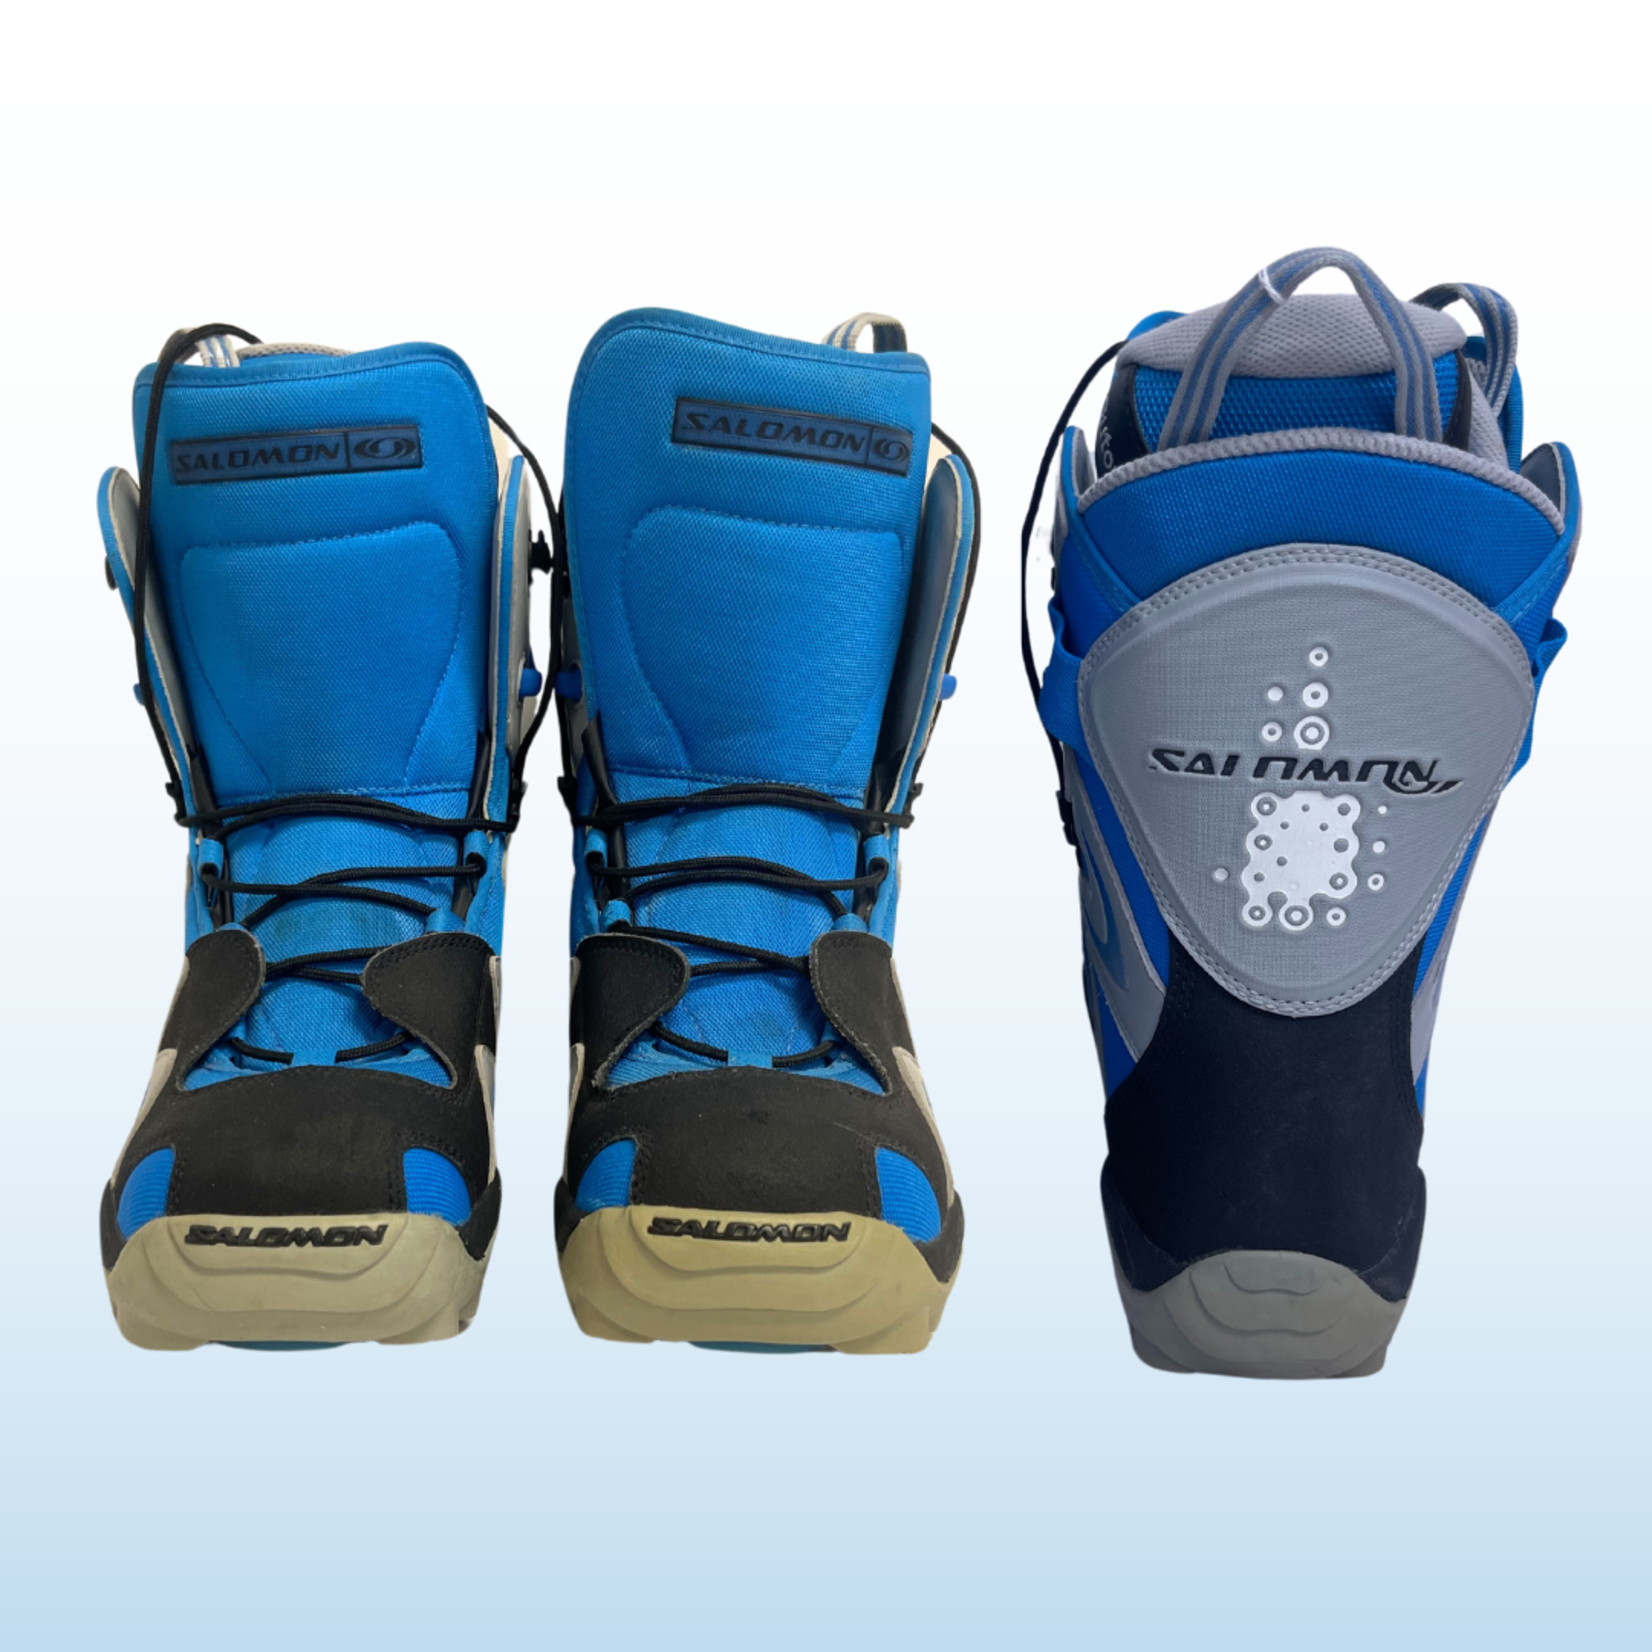 Salomon Salomon Dialogue Snowboard Boots, Size 12.0 MENS